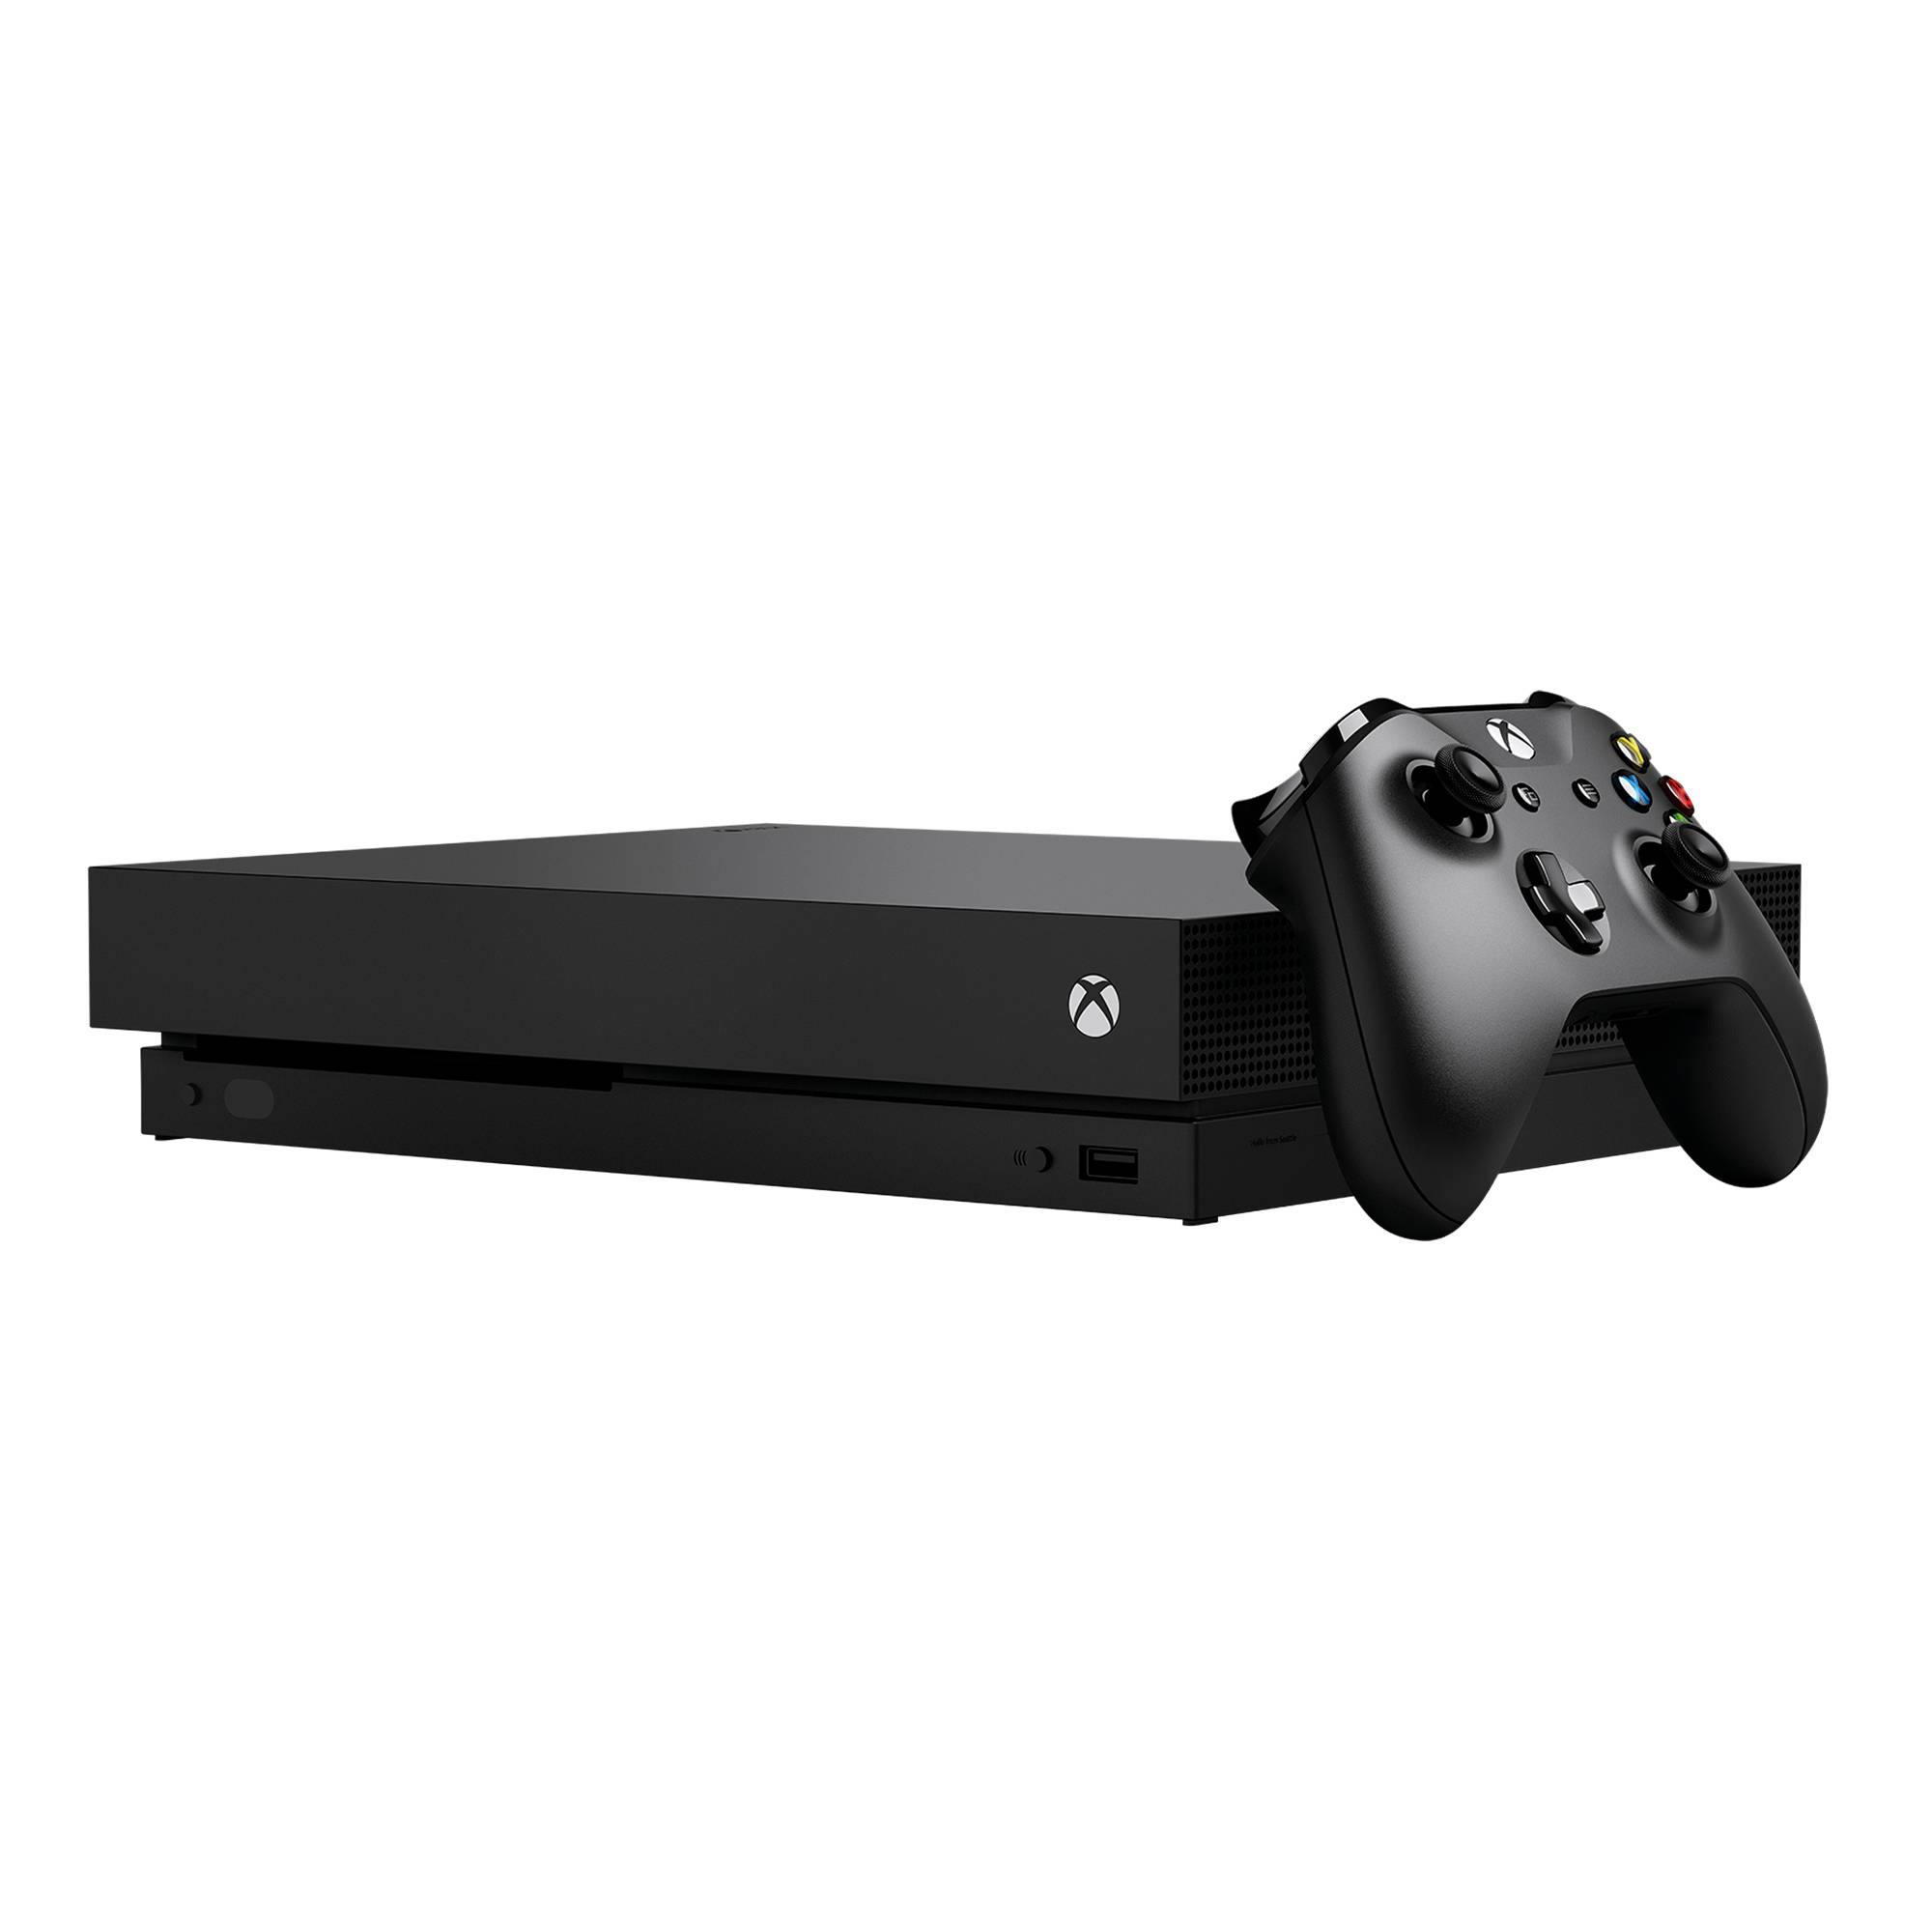 Microsoft Xbox One X 1TB Gears 5 Bundle, Black, CYV-00321 - image 5 of 14